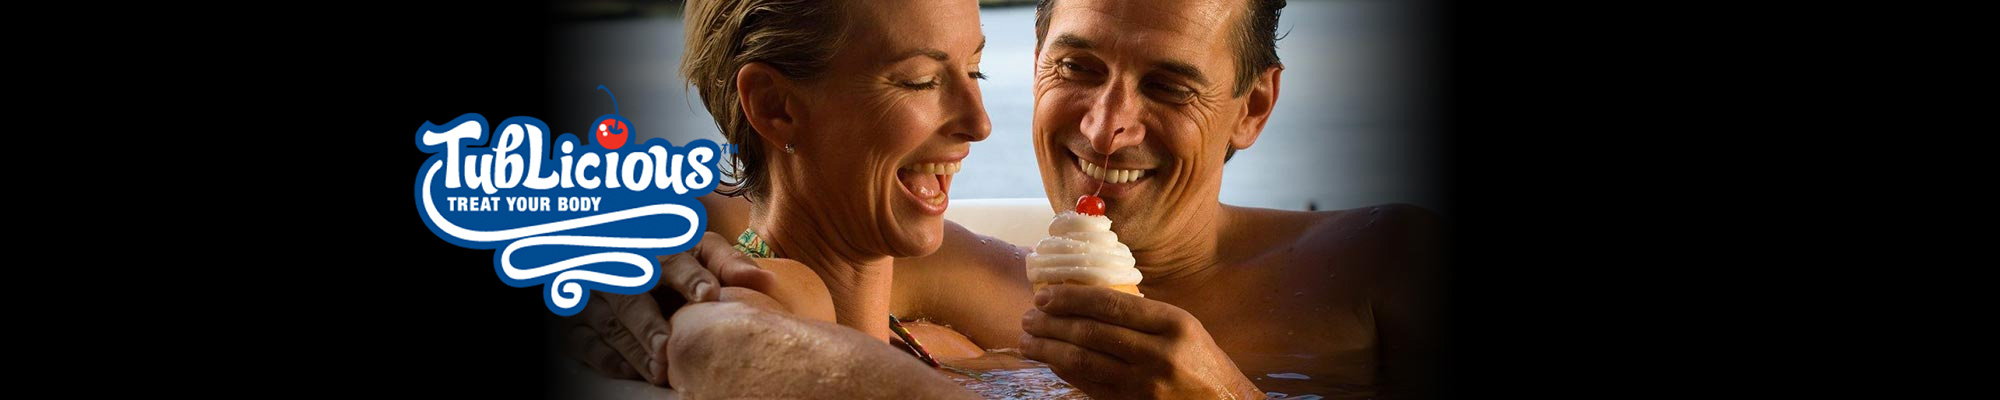 TubLicious Treat Your Body couple with ice cream cone.